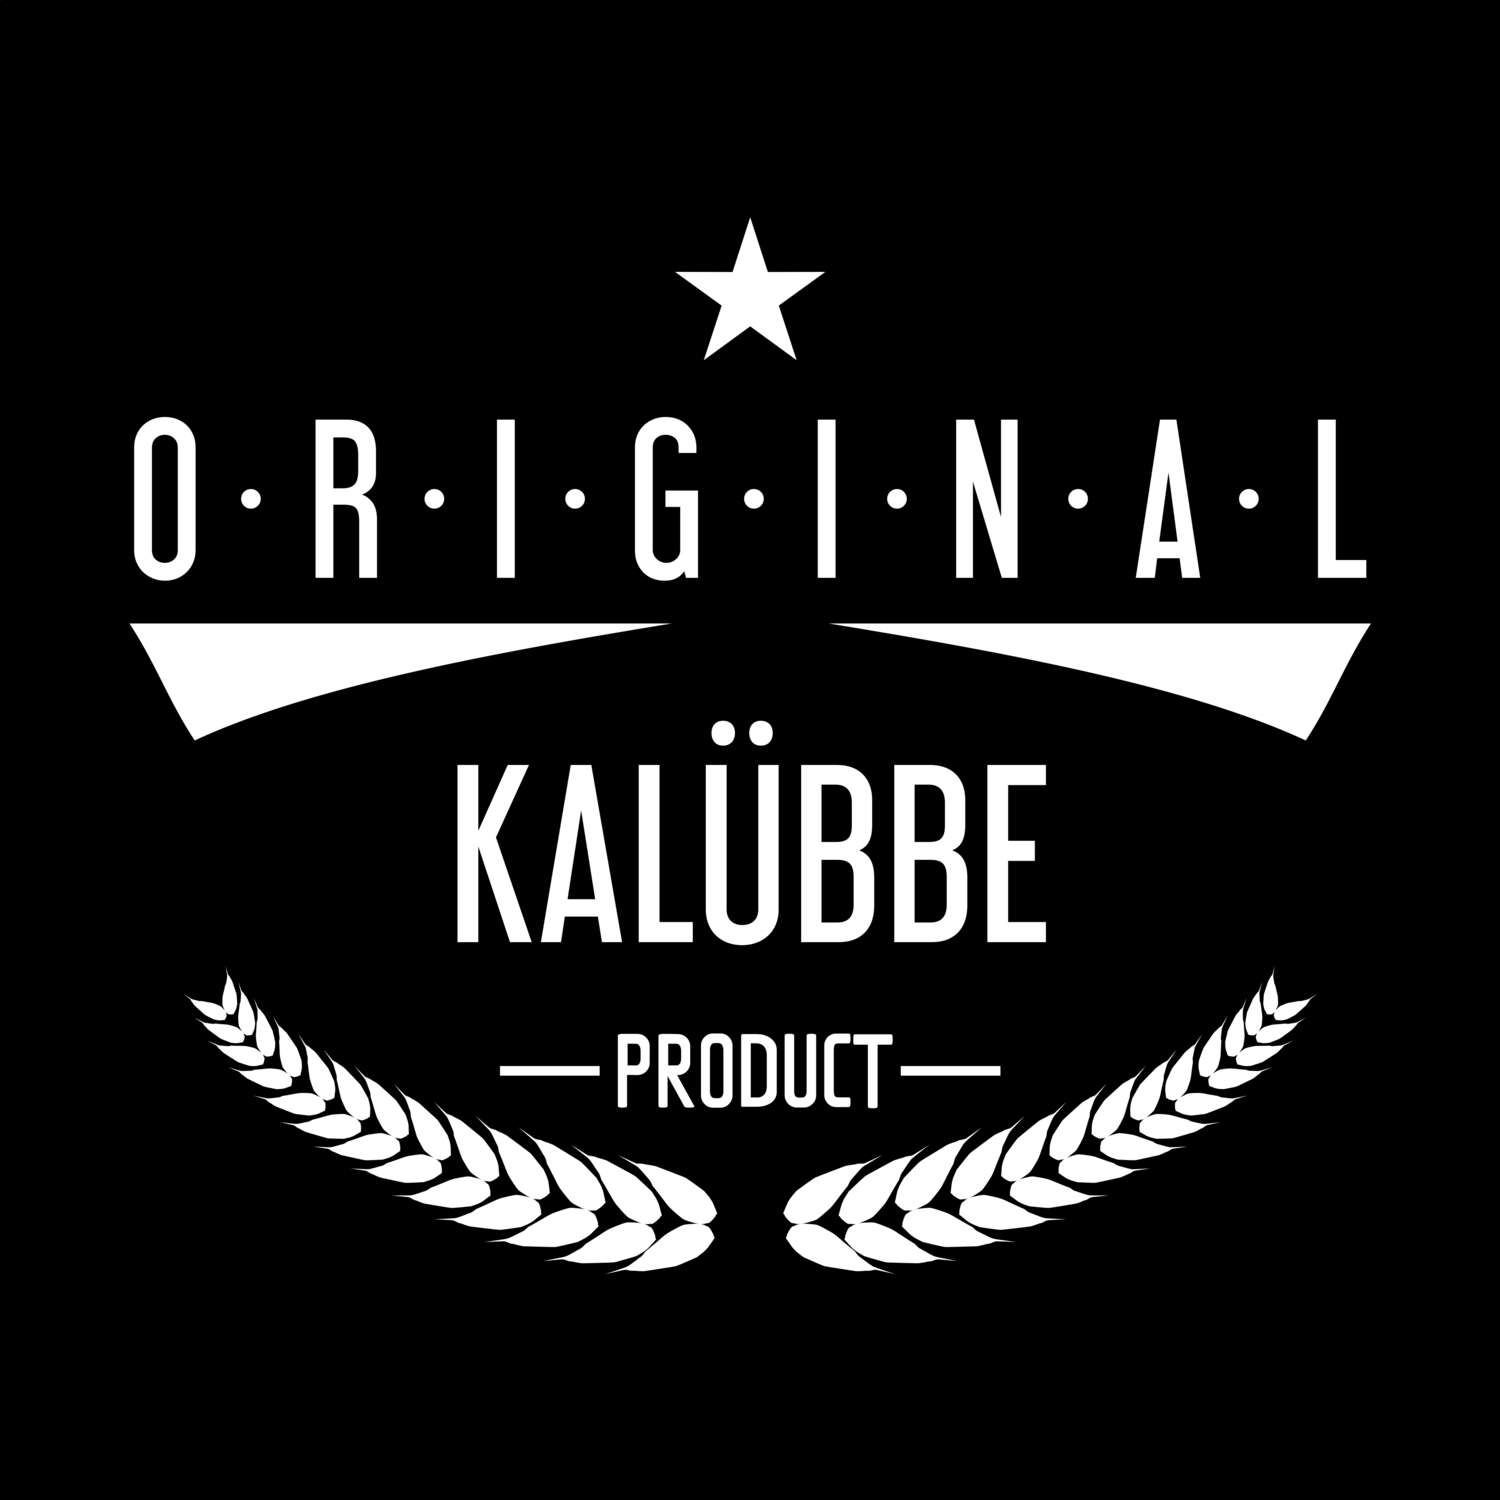 Kalübbe T-Shirt »Original Product«